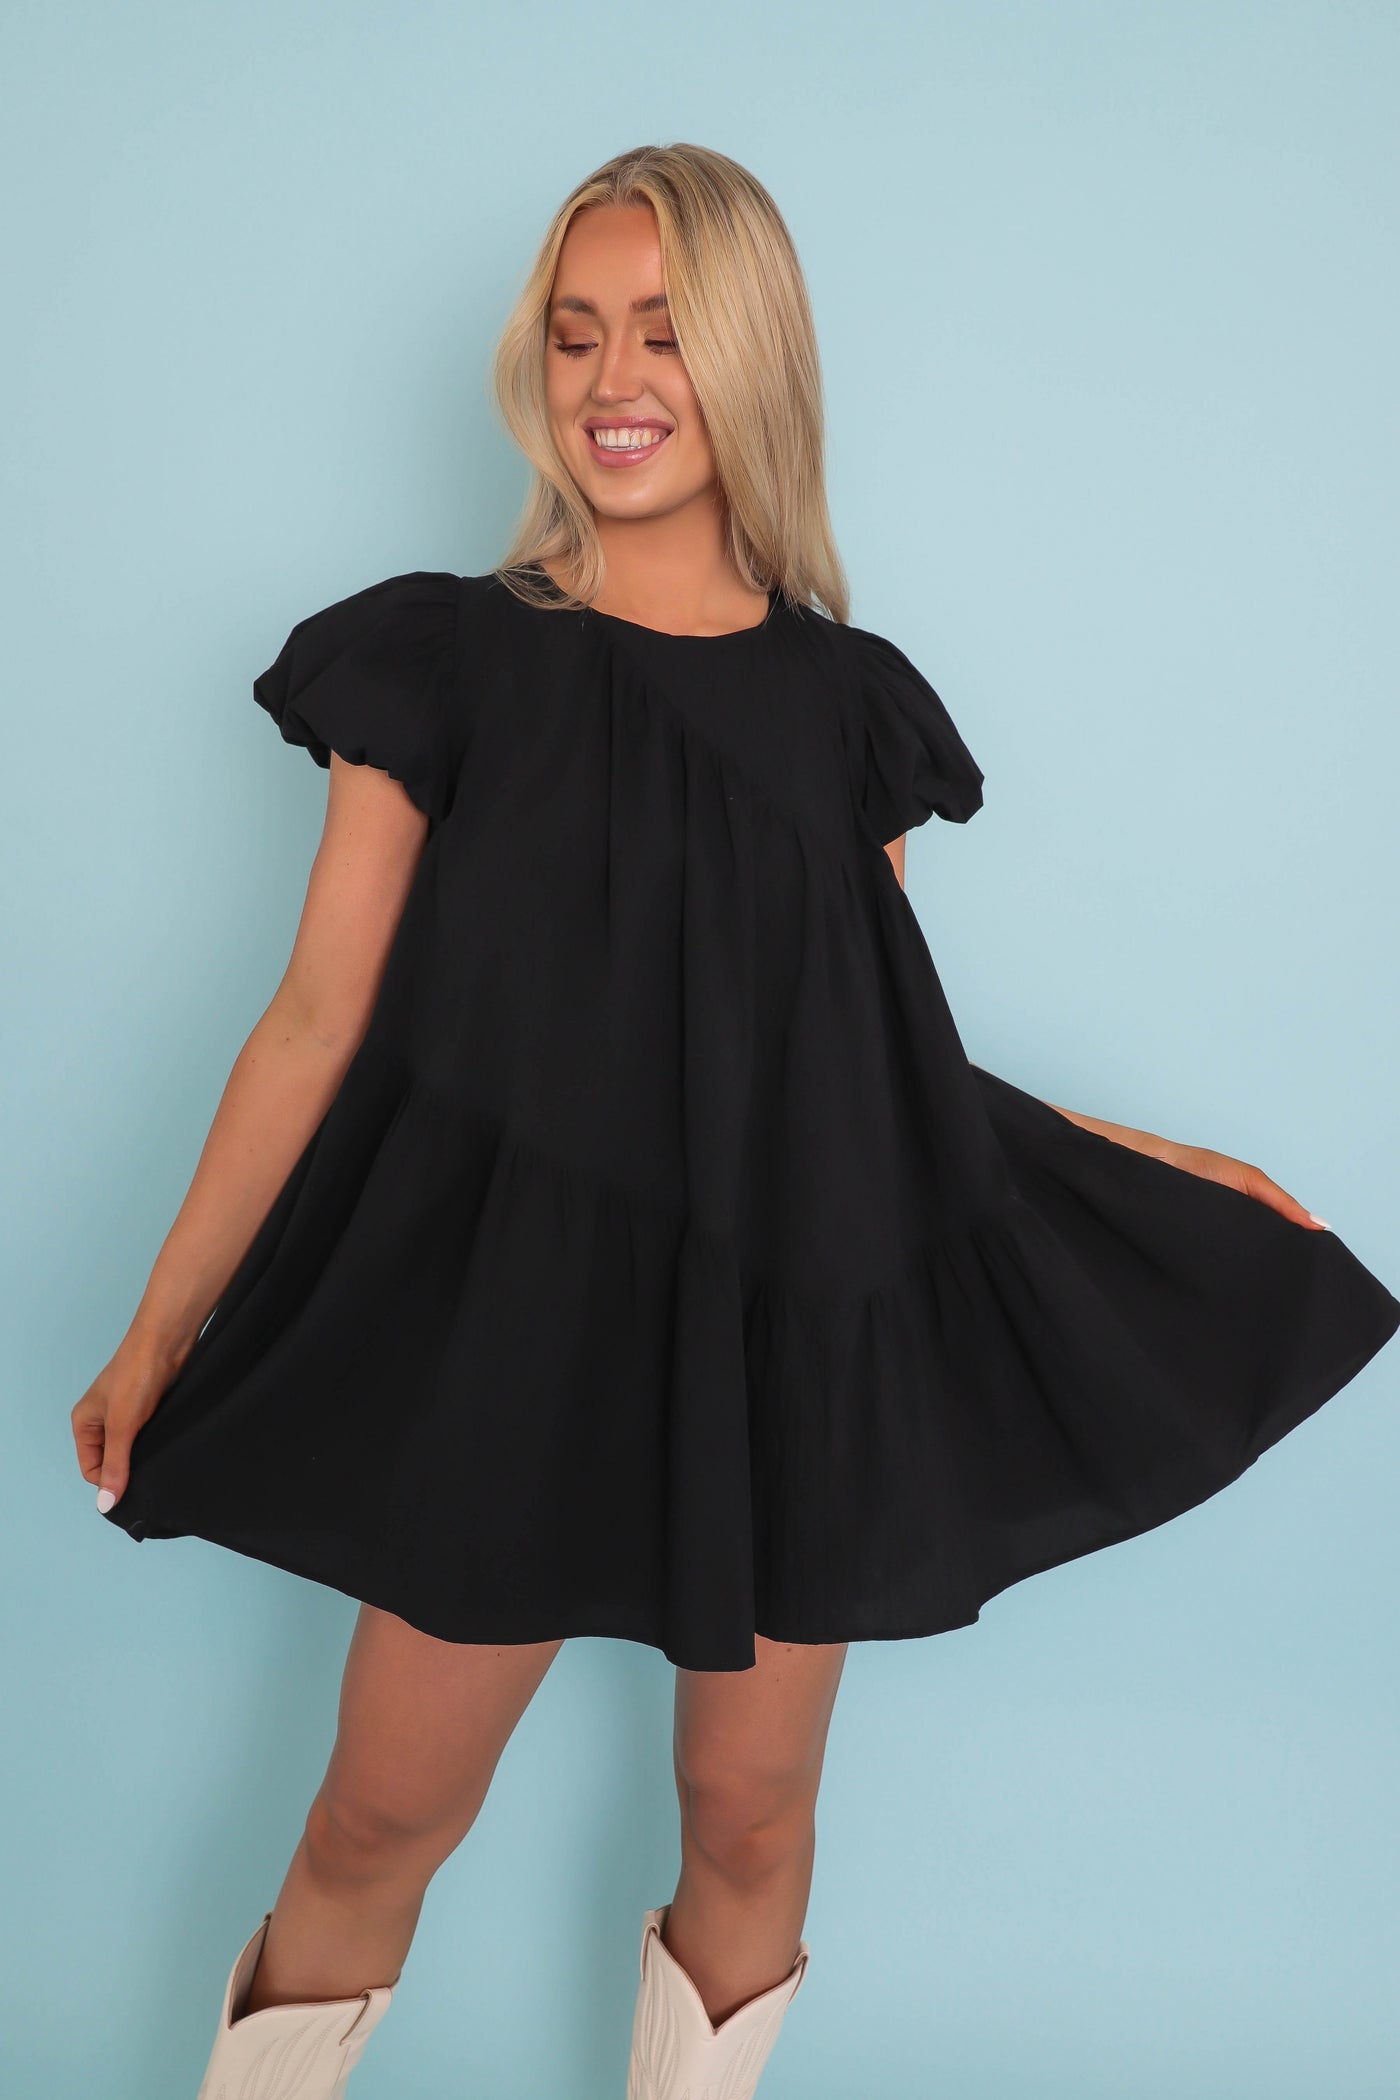 Asymmetrical BabyDoll Dress- Fun Little Black Dress- &Merci Dresses